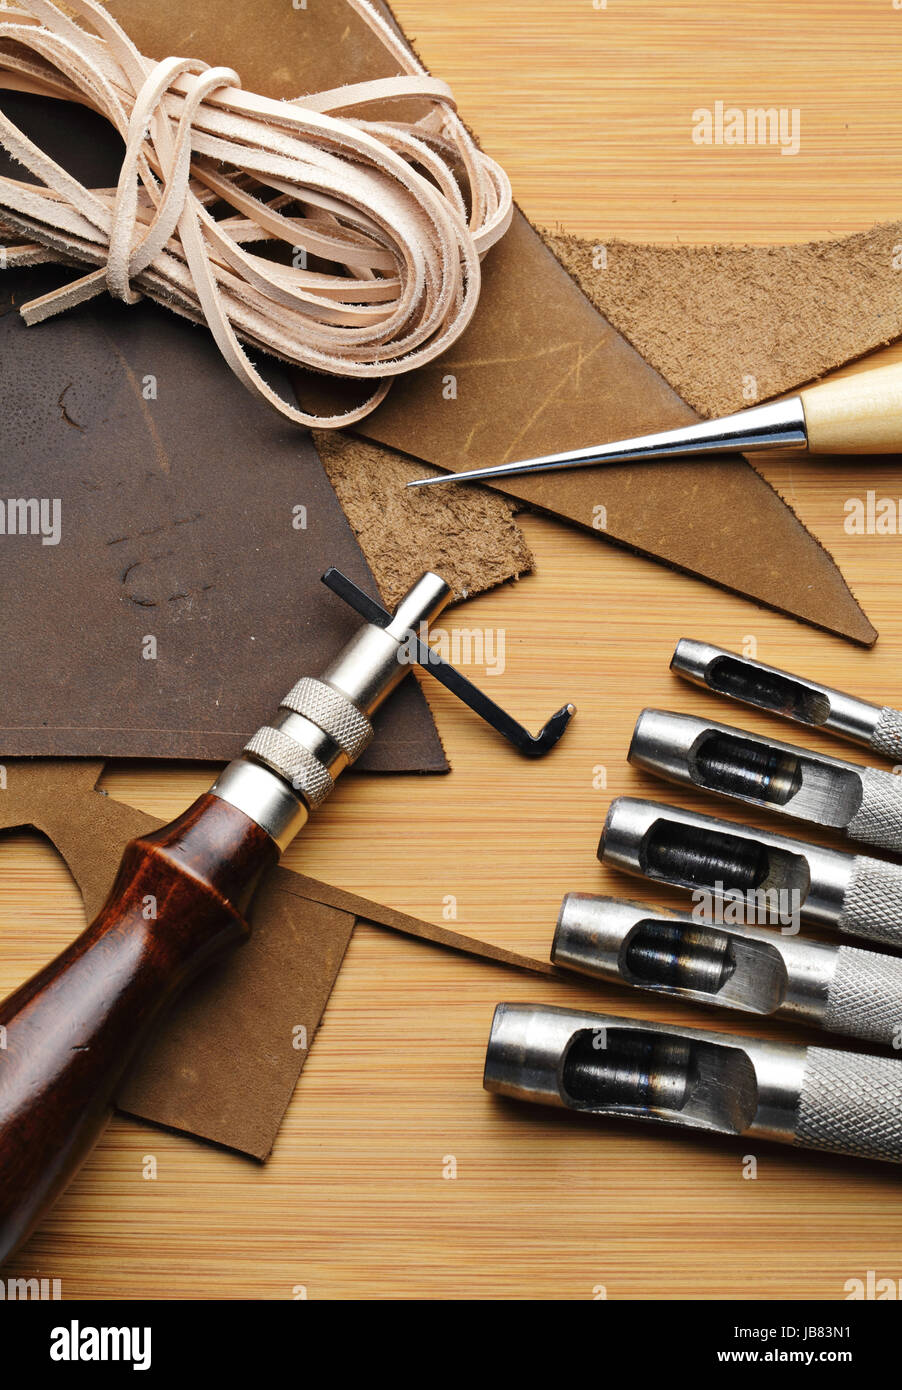 Tanner tools. Handmade Skiving knife and awl Stock Photo - Alamy